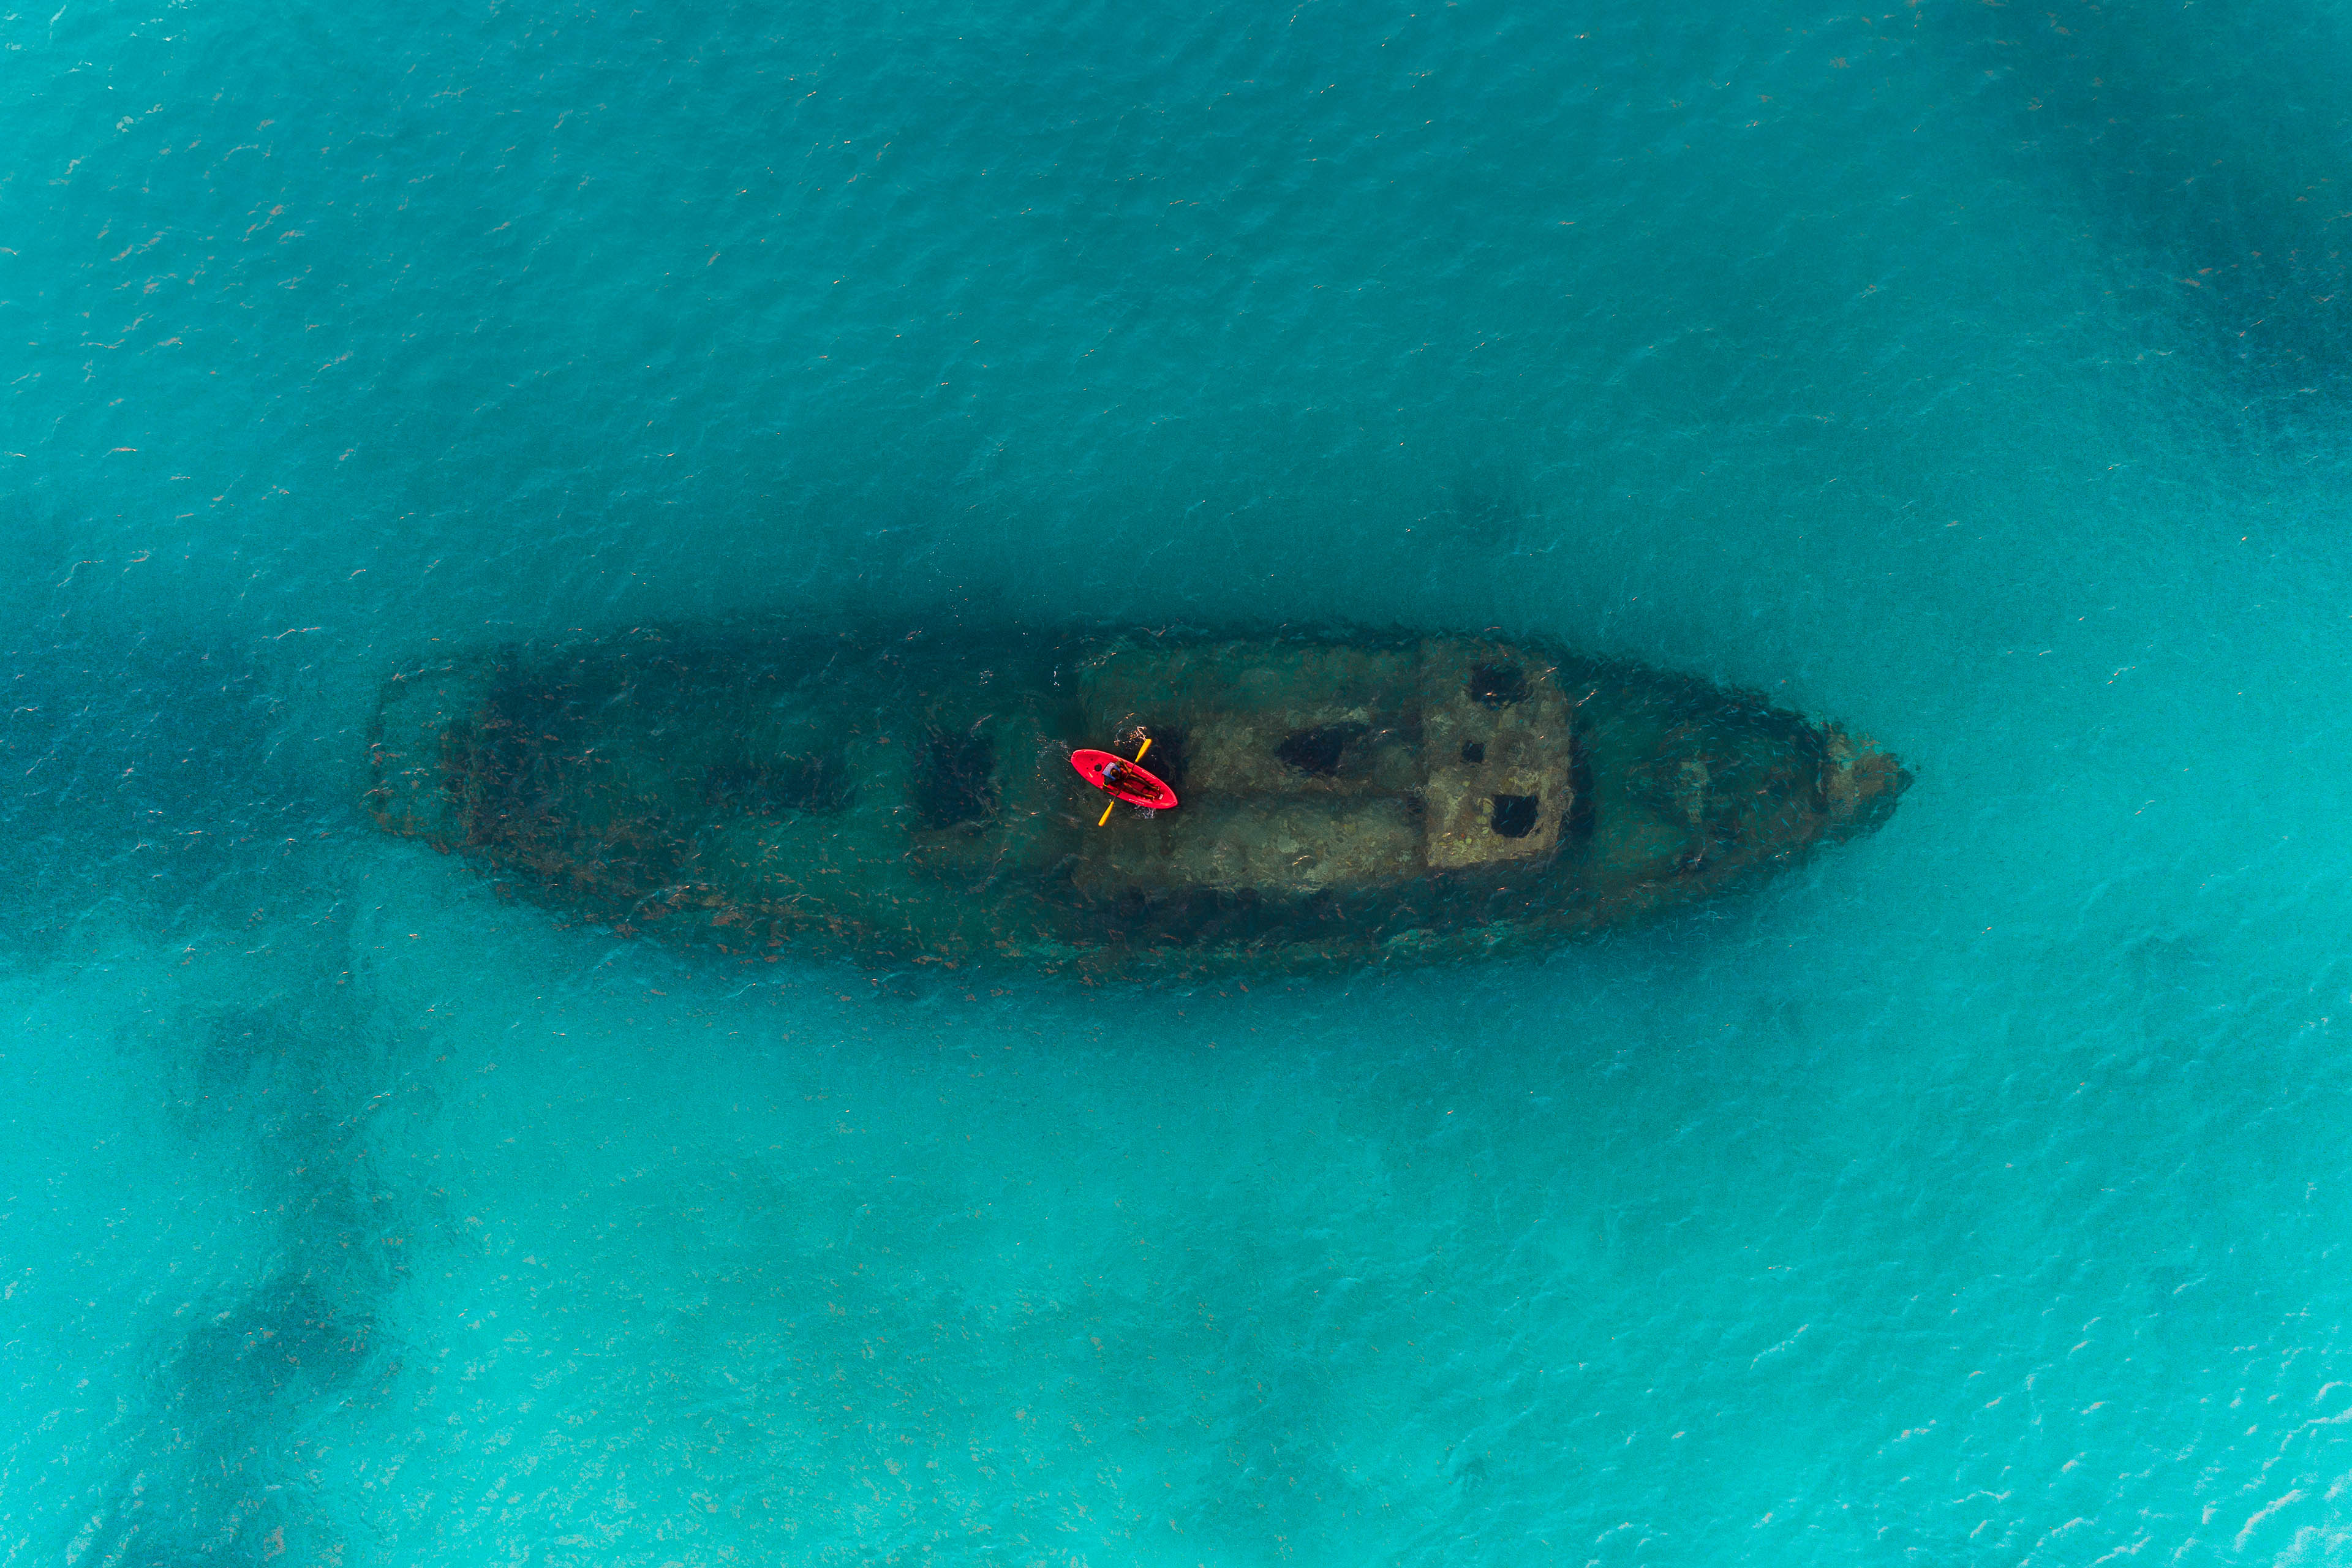 r921-ey-red-kayak-floating-above-a-shipwreck-carlisle-bay-barbados-background.jpg